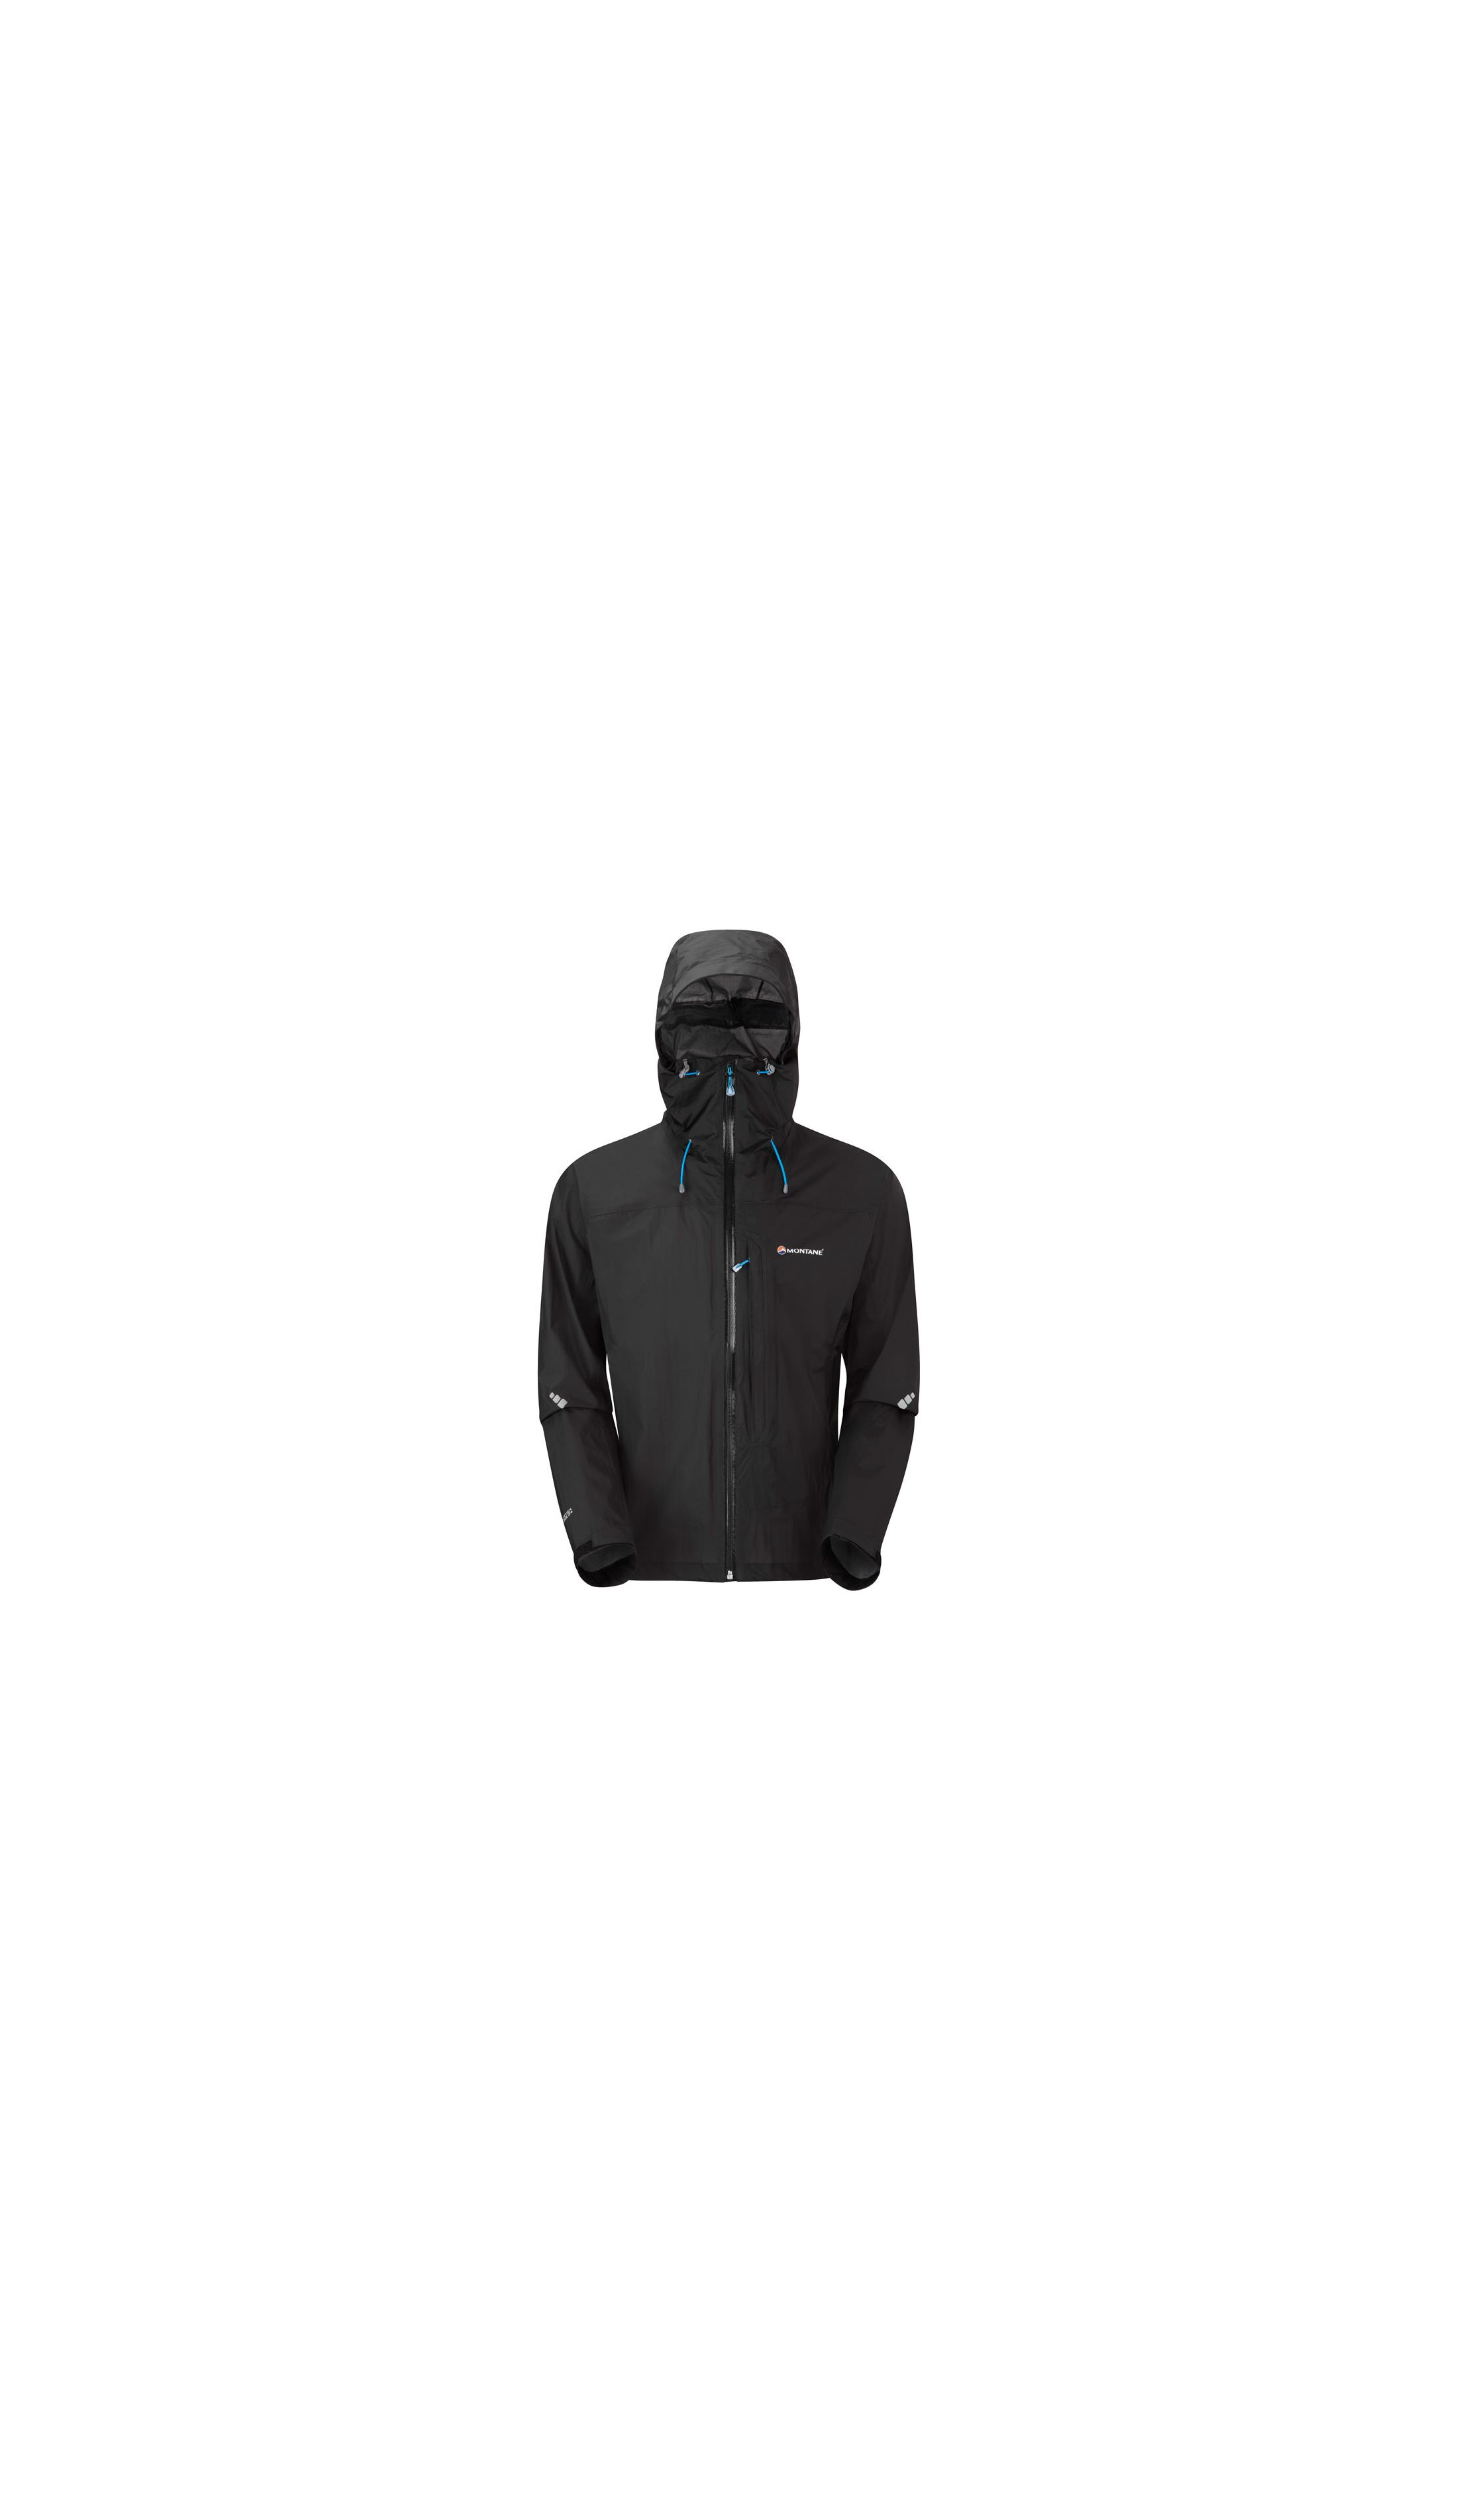 Montane Clothing Mens Minimus Jacket: waterproof, ultra-lightweight ...